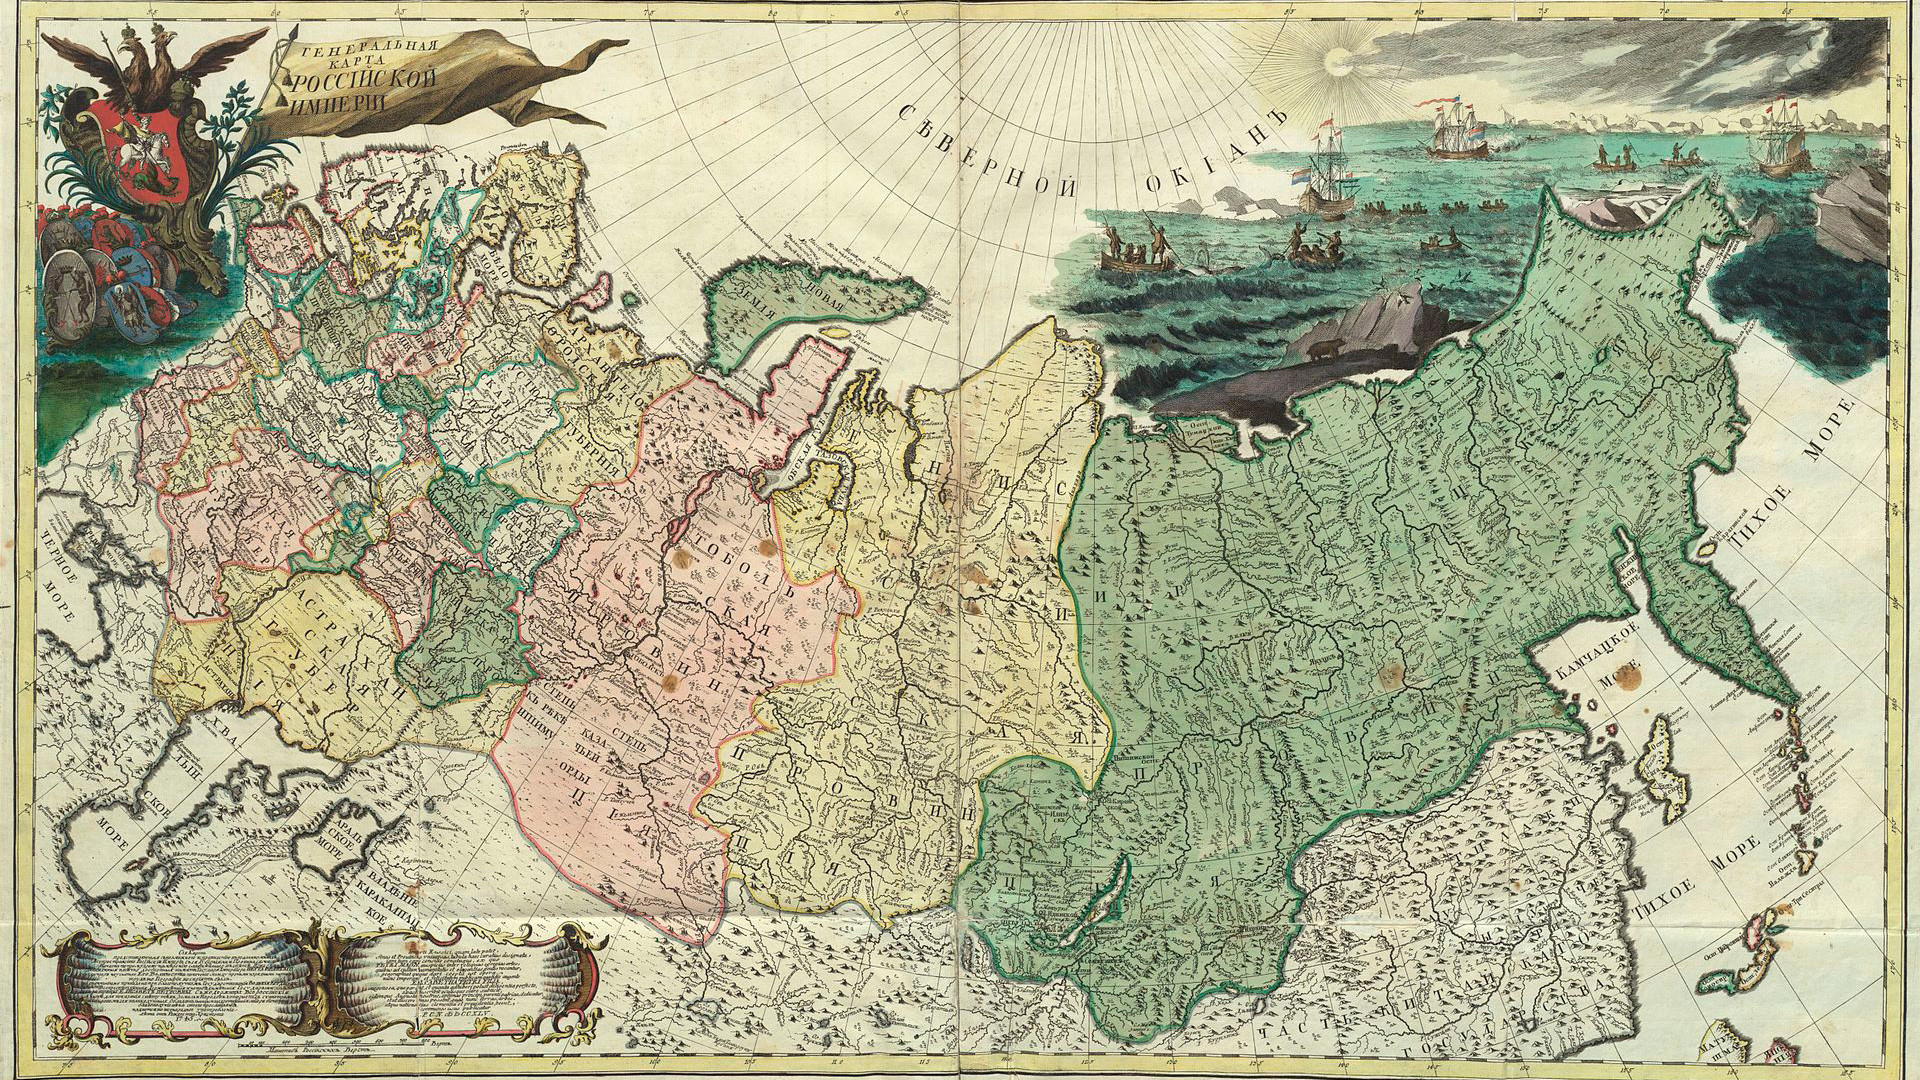 Russischer Atlas, 1745
